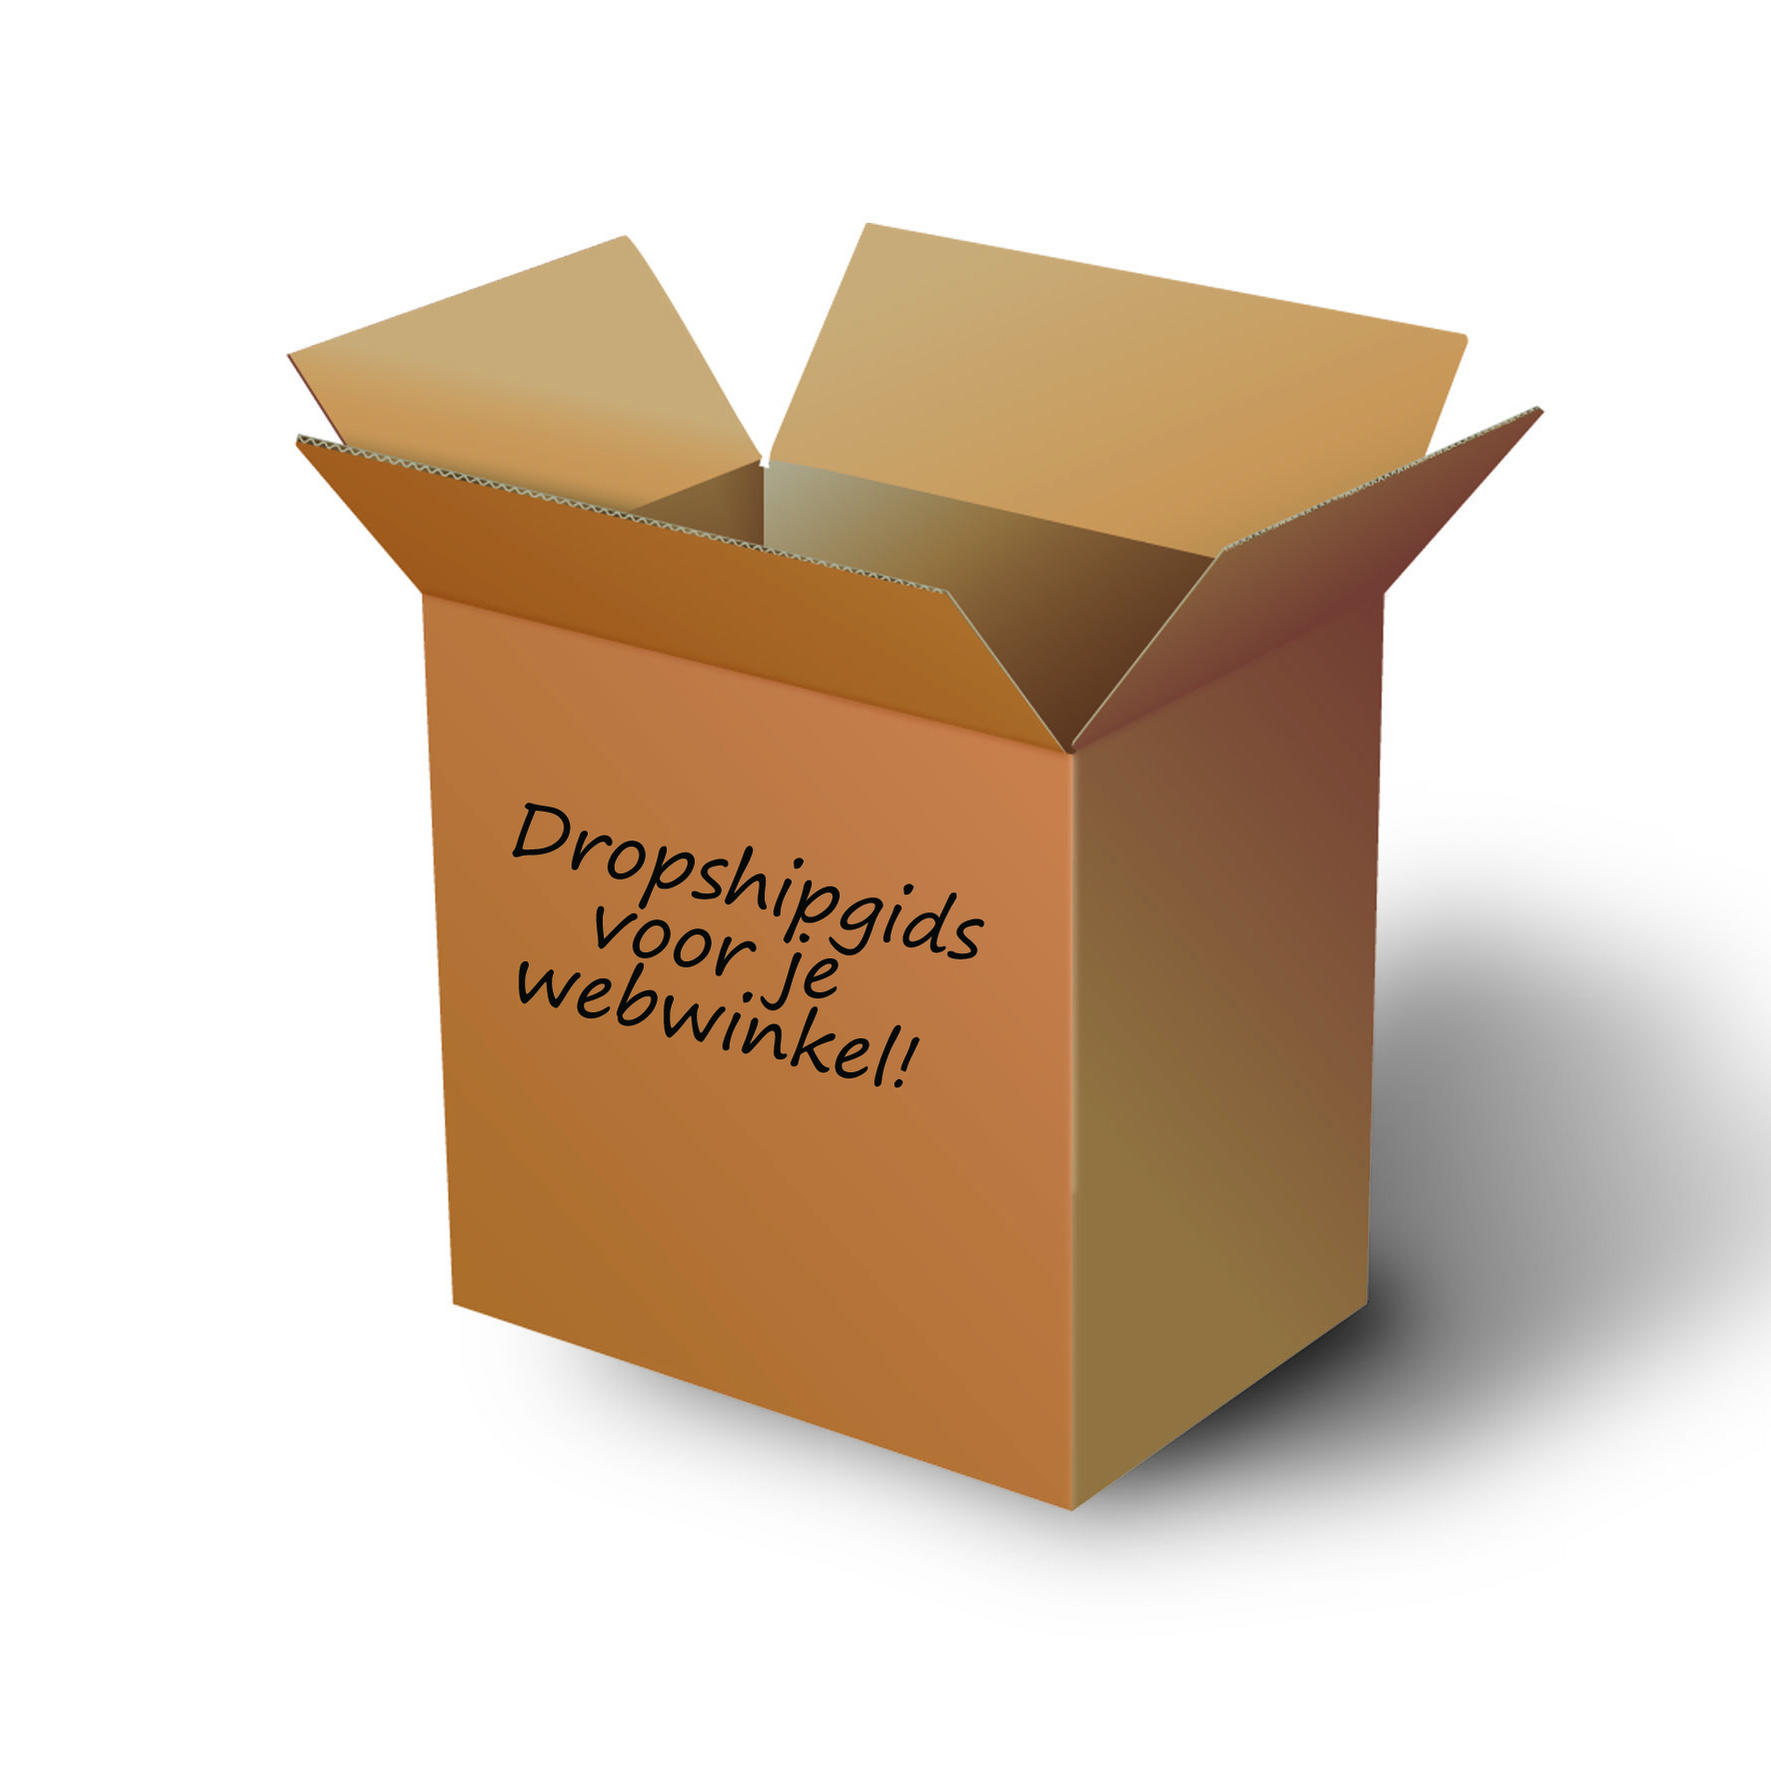 Dropshipgids met 29 NL dropshippers!-dropship2-jpg